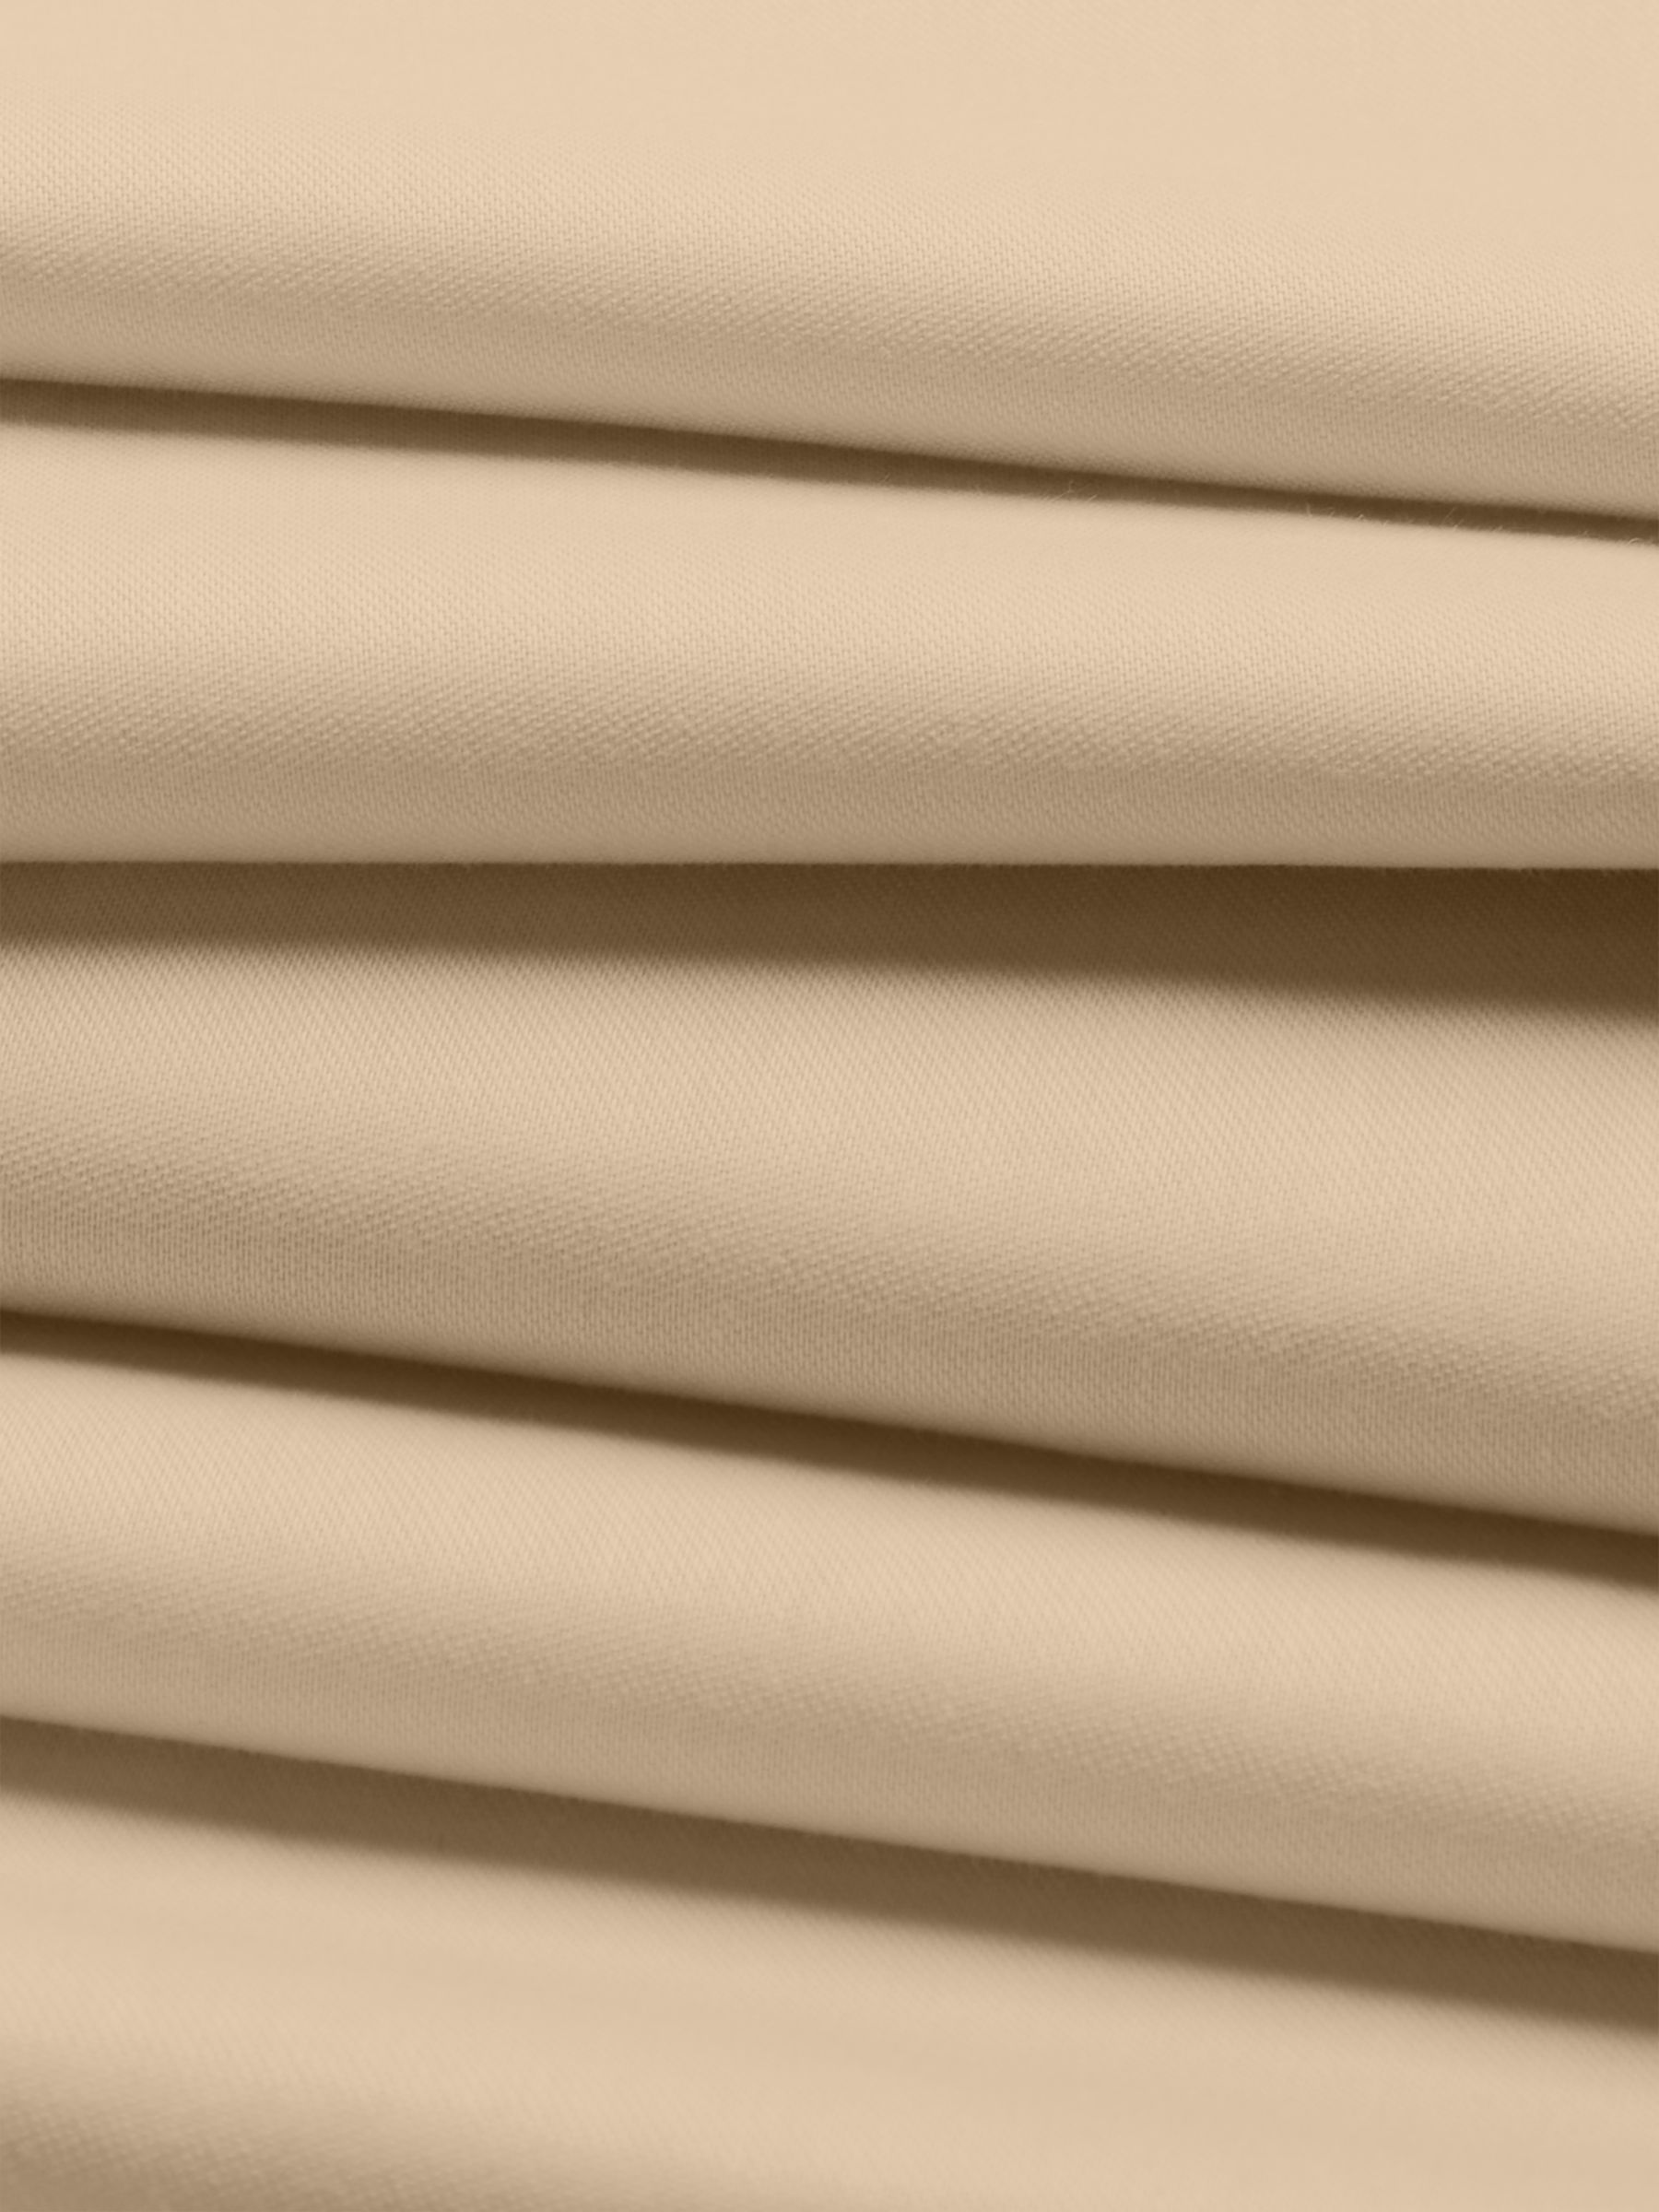 John Lewis Premium Cotton Curtain Lining Fabric, Mocha